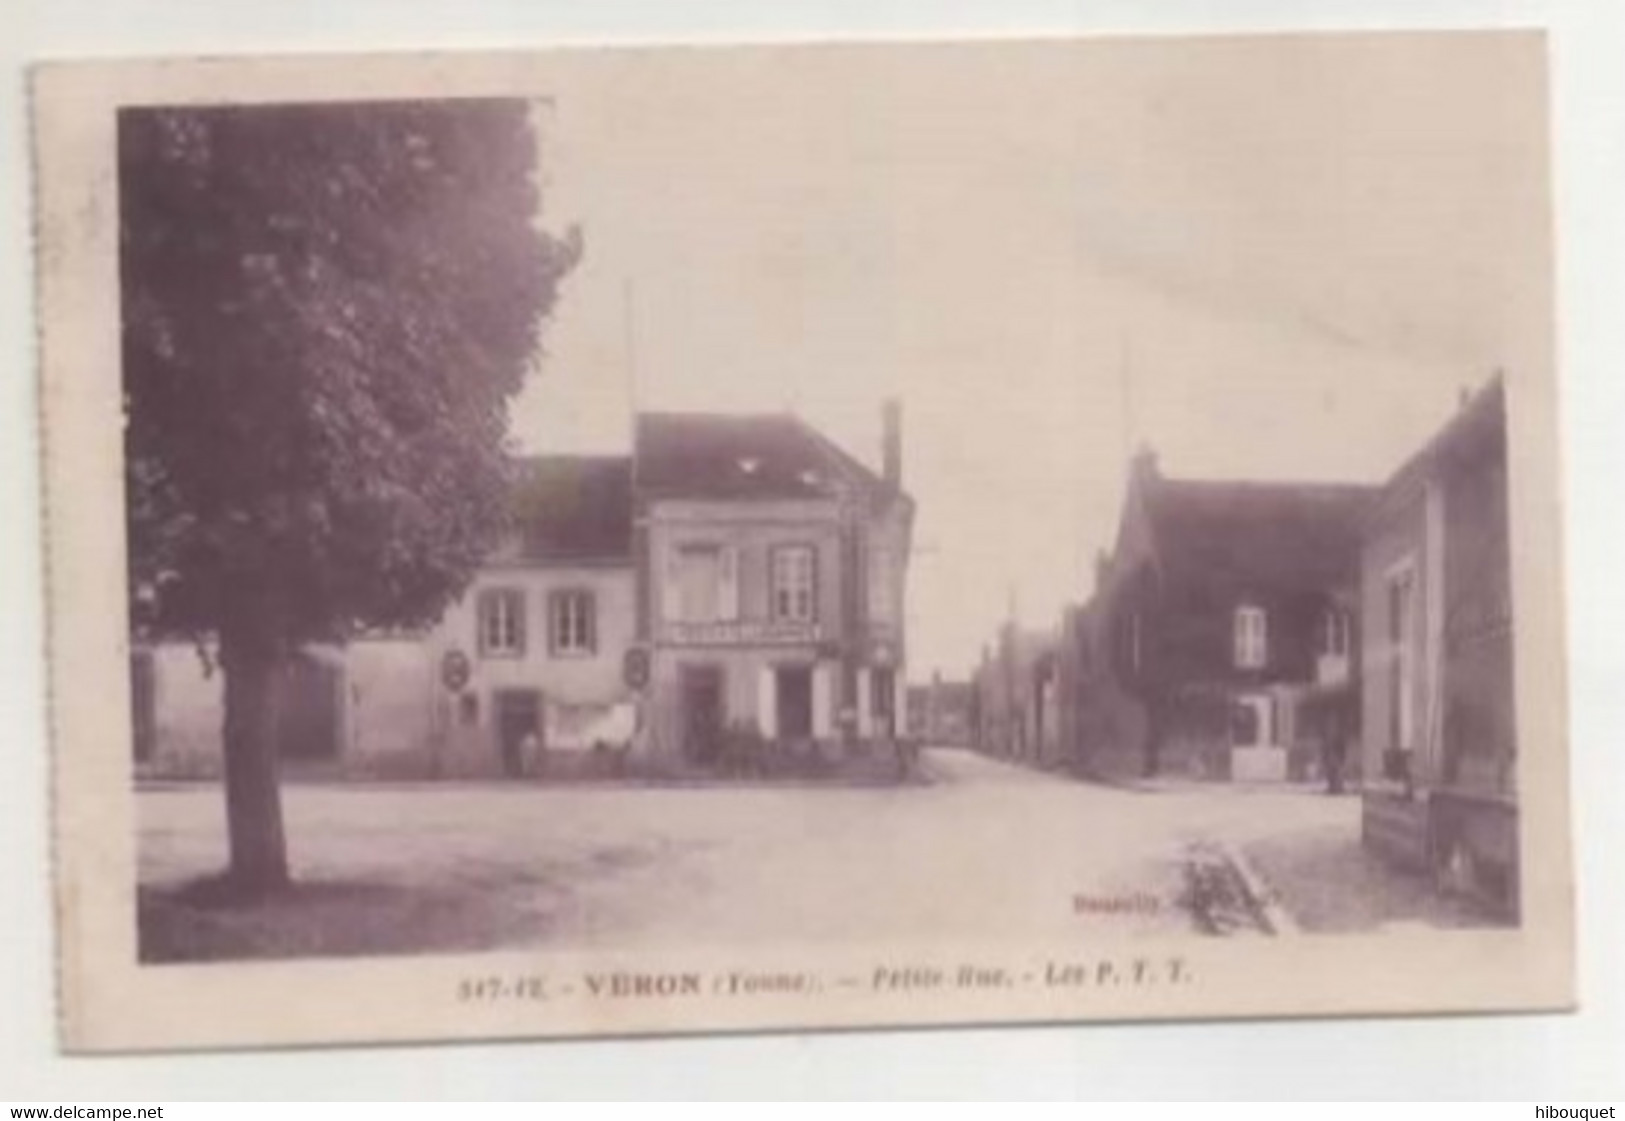 CPA, Veron, Petite Rue, Les P.T.T. - Veron